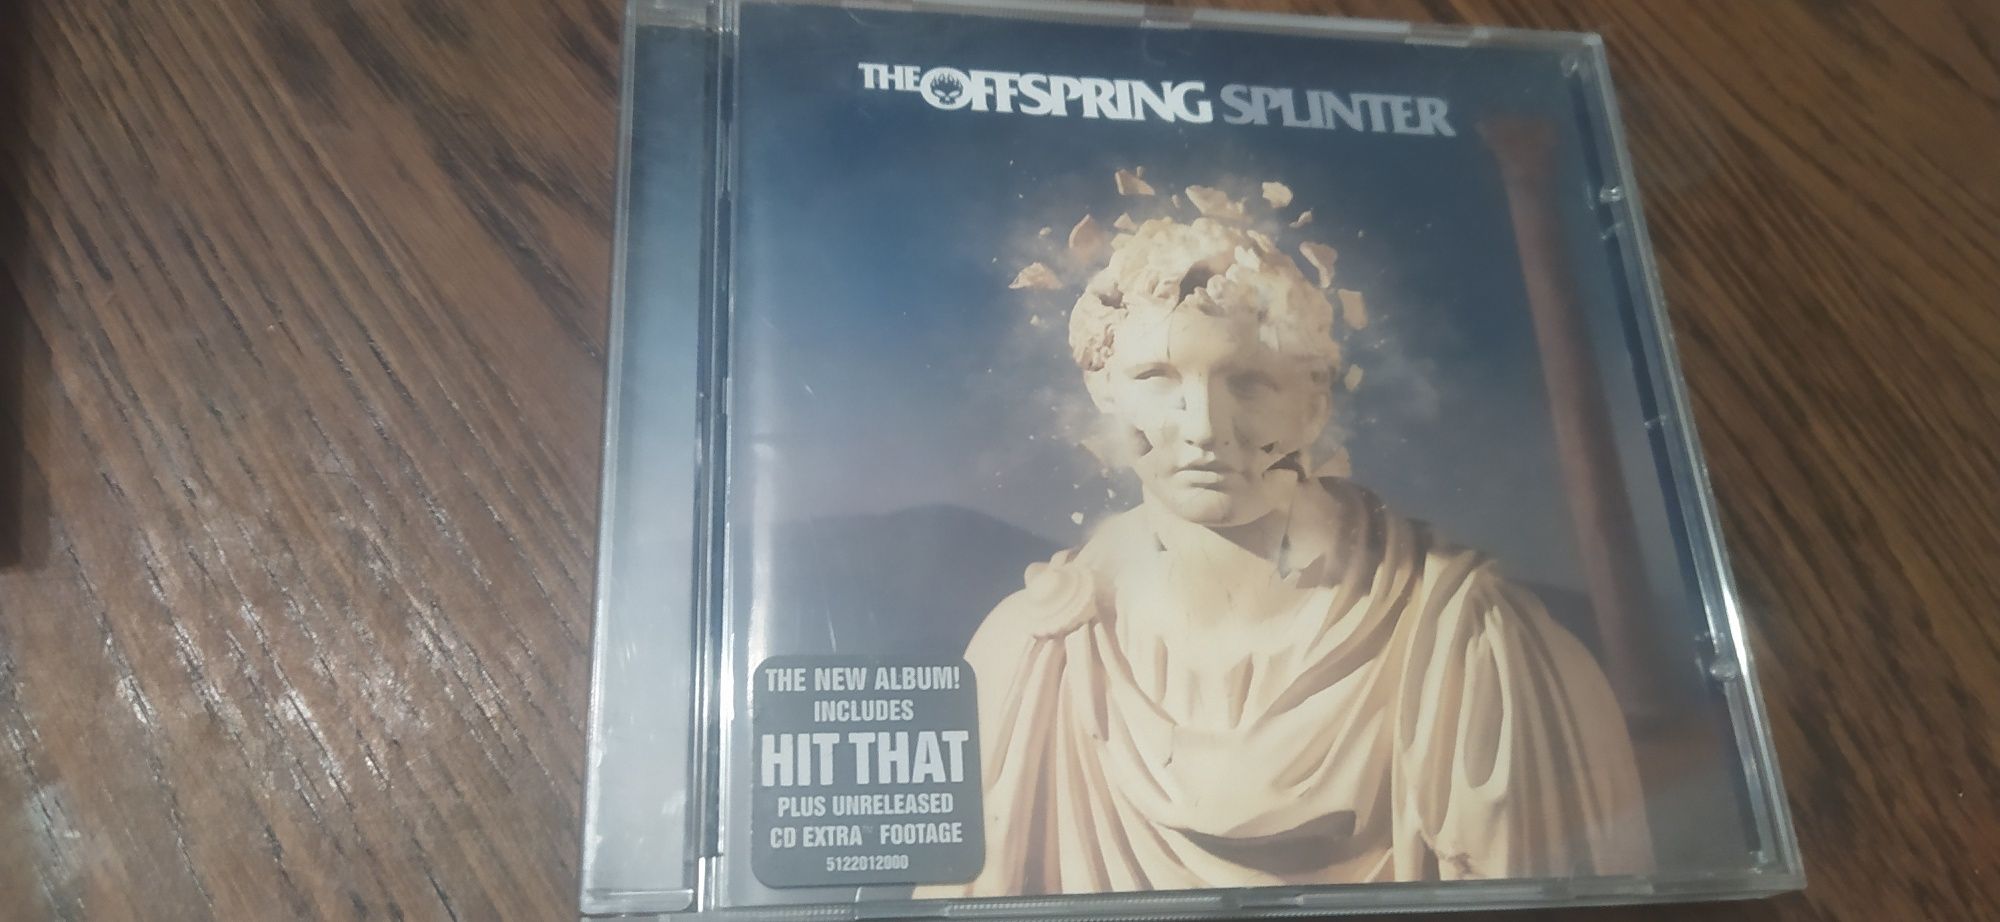 The Offspring Splinter cd